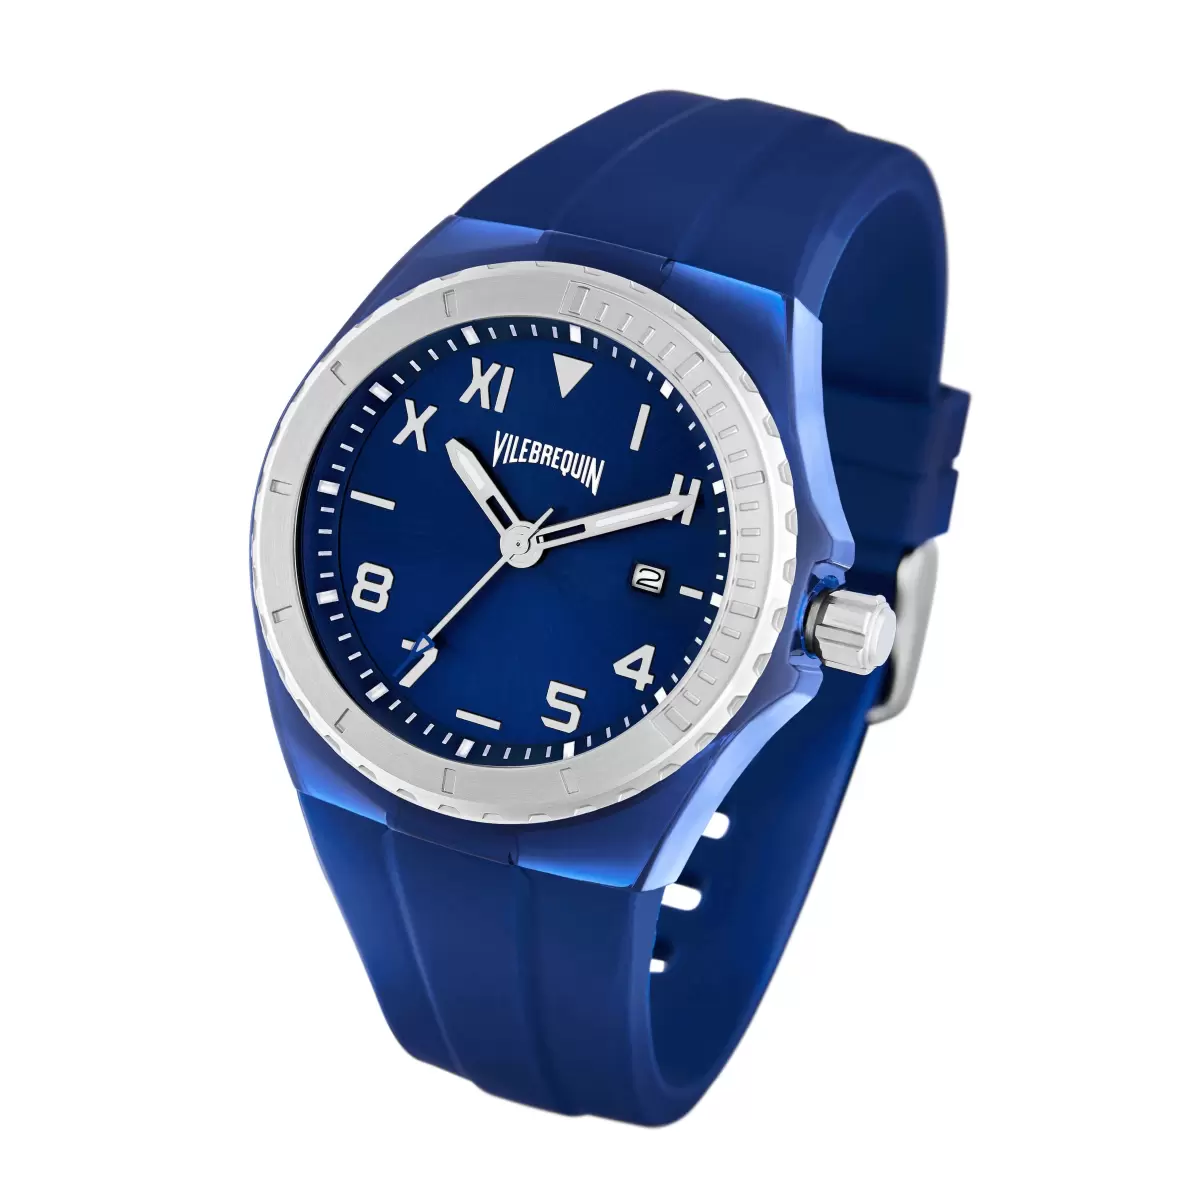 Costumbre Reloj De Silicona De Vilebrequin Relojes Hombre Azul Marino / Azul - 1